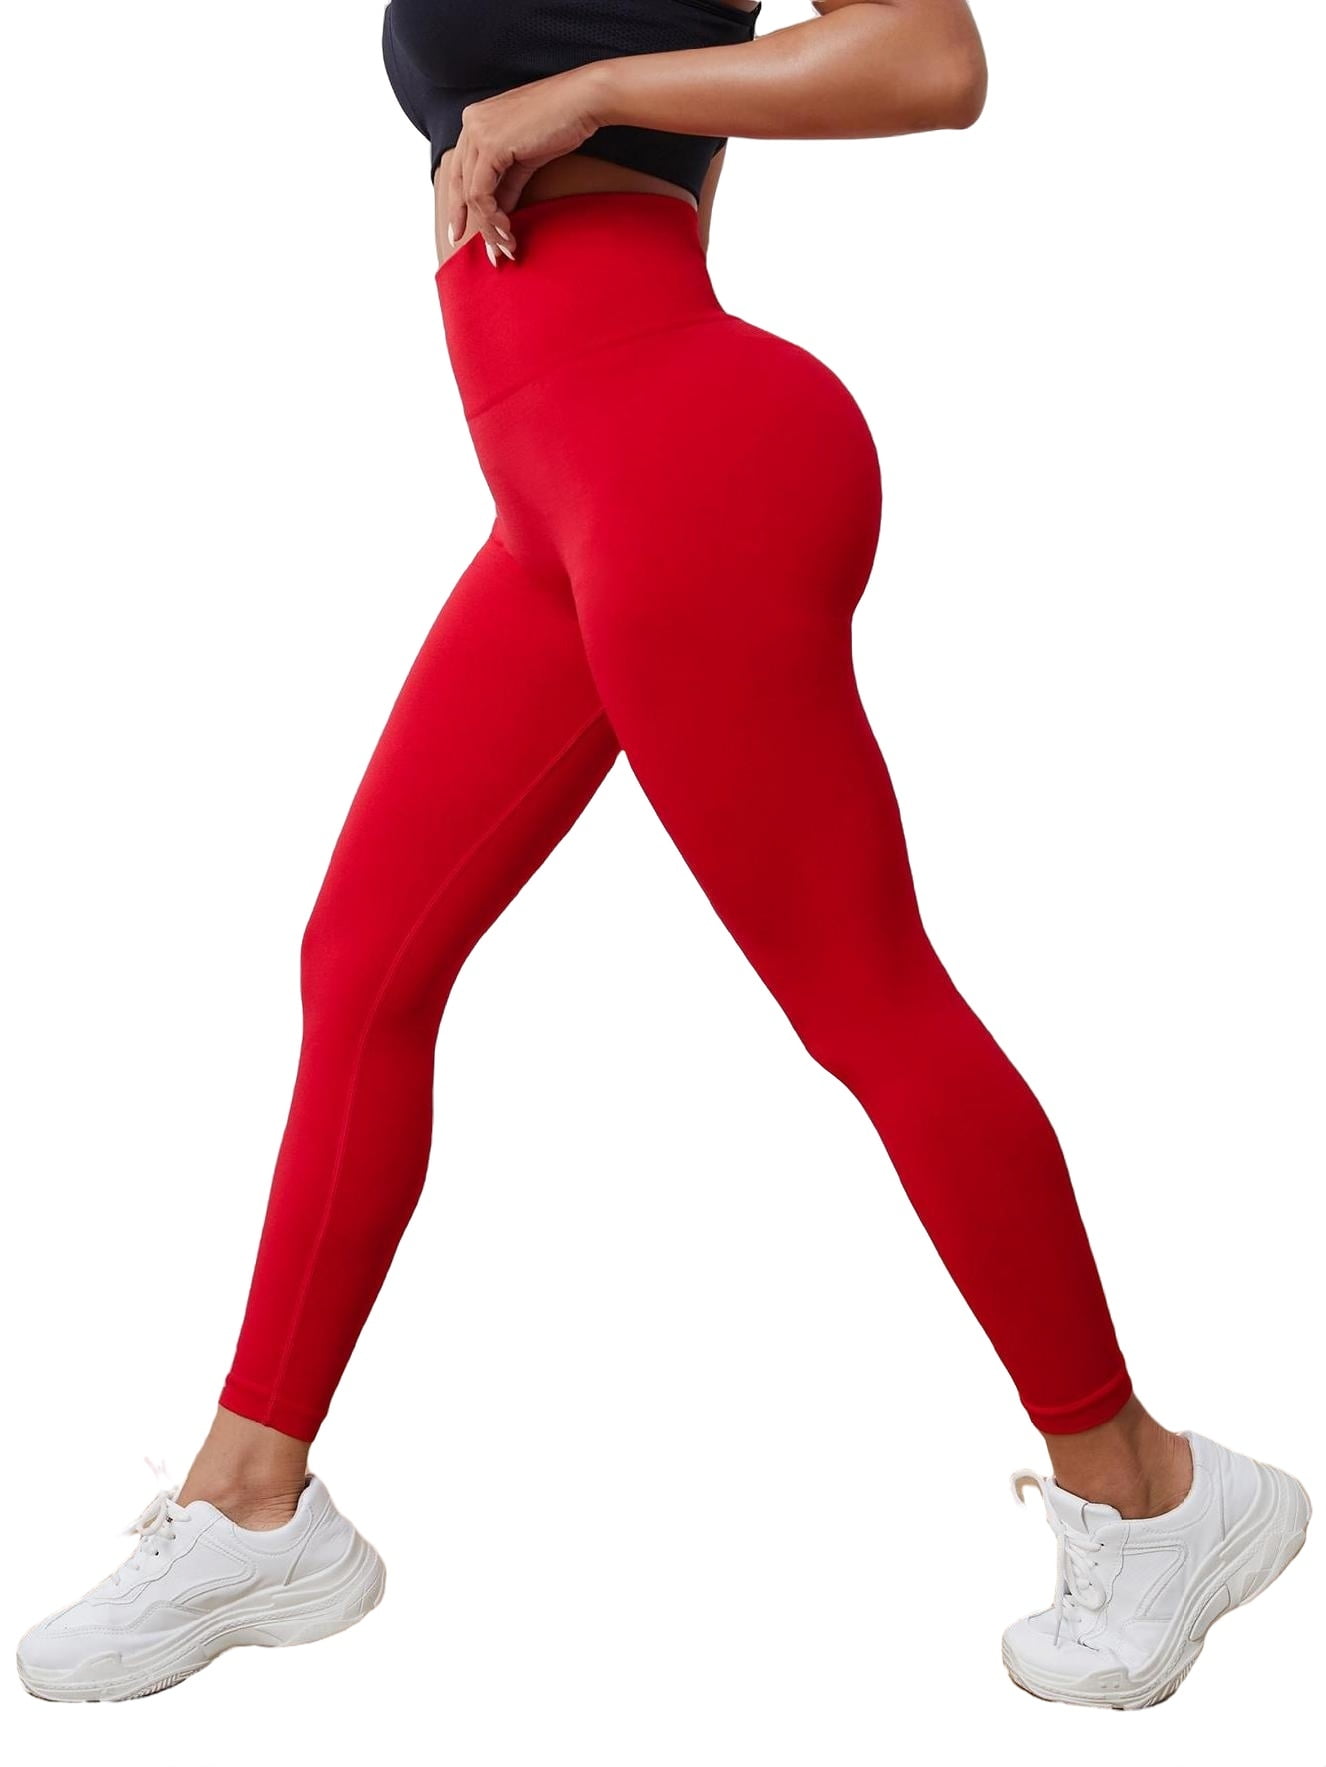 Women's Plain Red Sports Leggings L (8/10) - Walmart.com